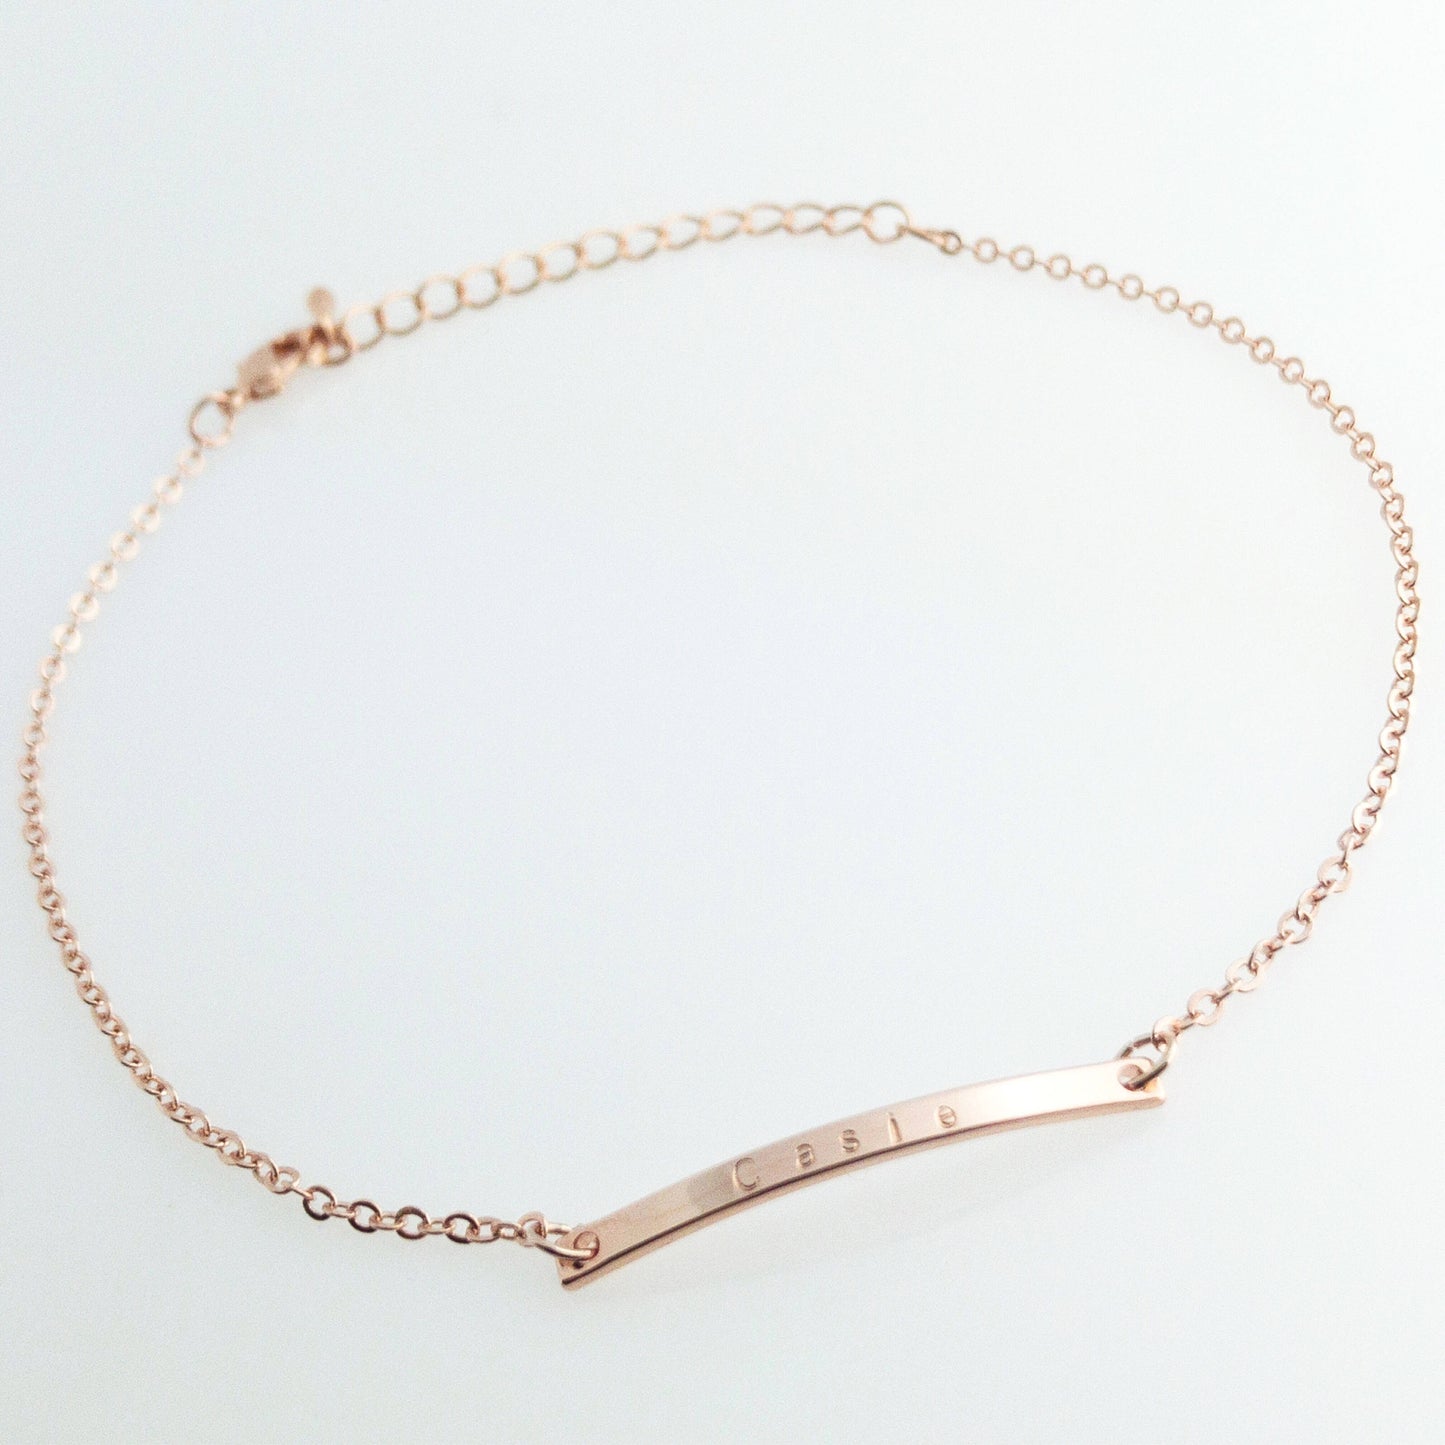 Customized Name Bracelet - Gift for Daughter or Mom